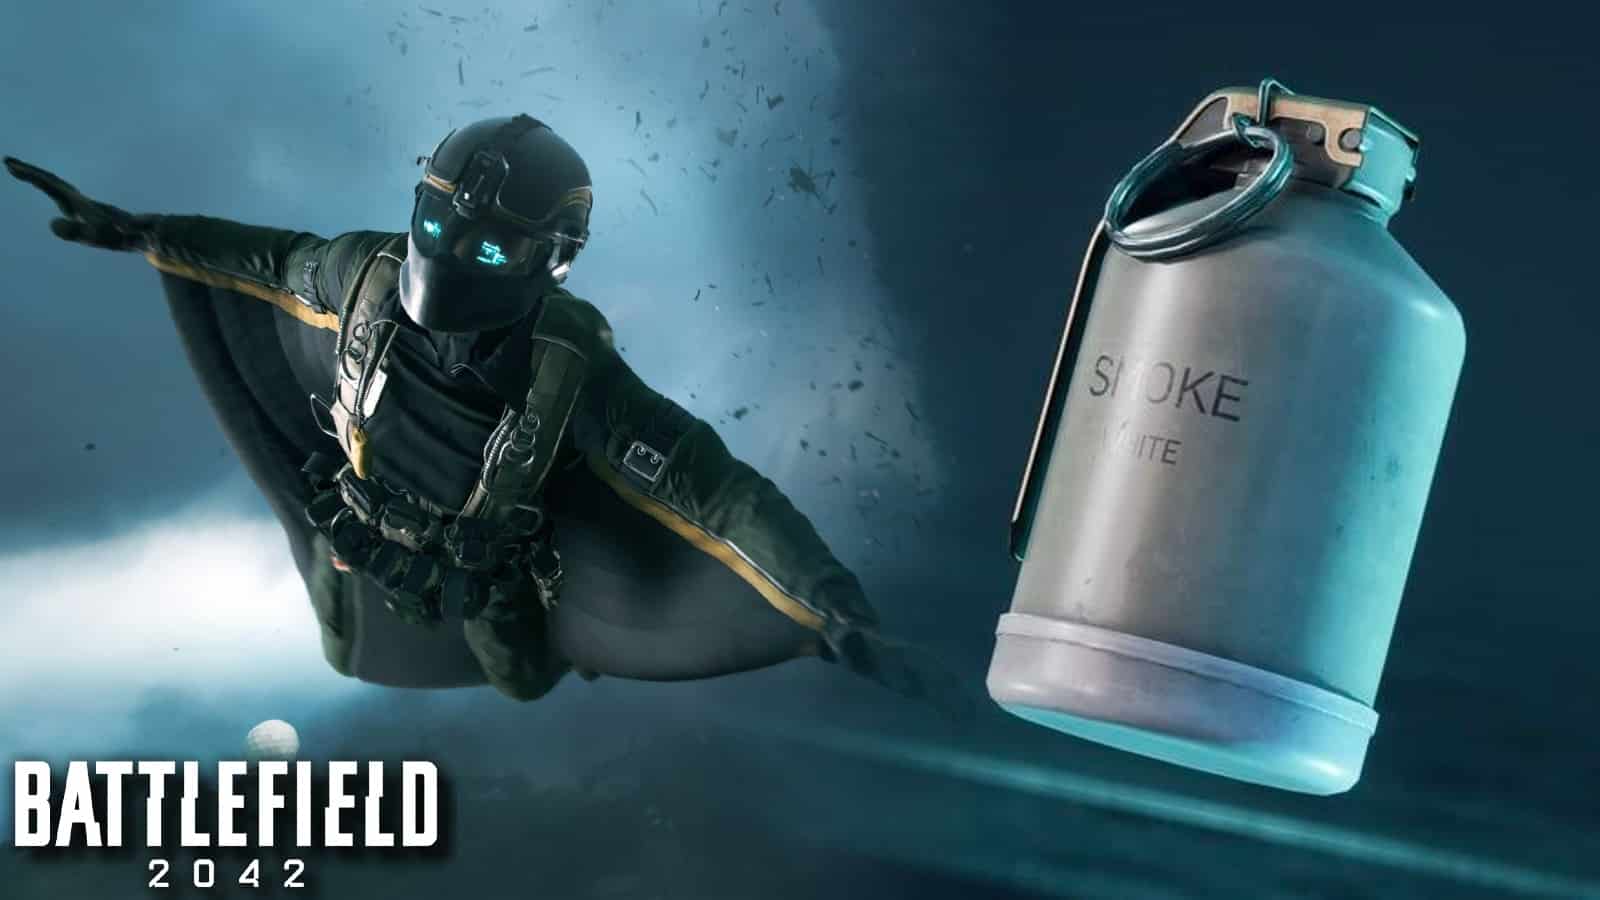 Battlefield 2042 Smoke Grenade Bug Makes Equipment Completely Useless